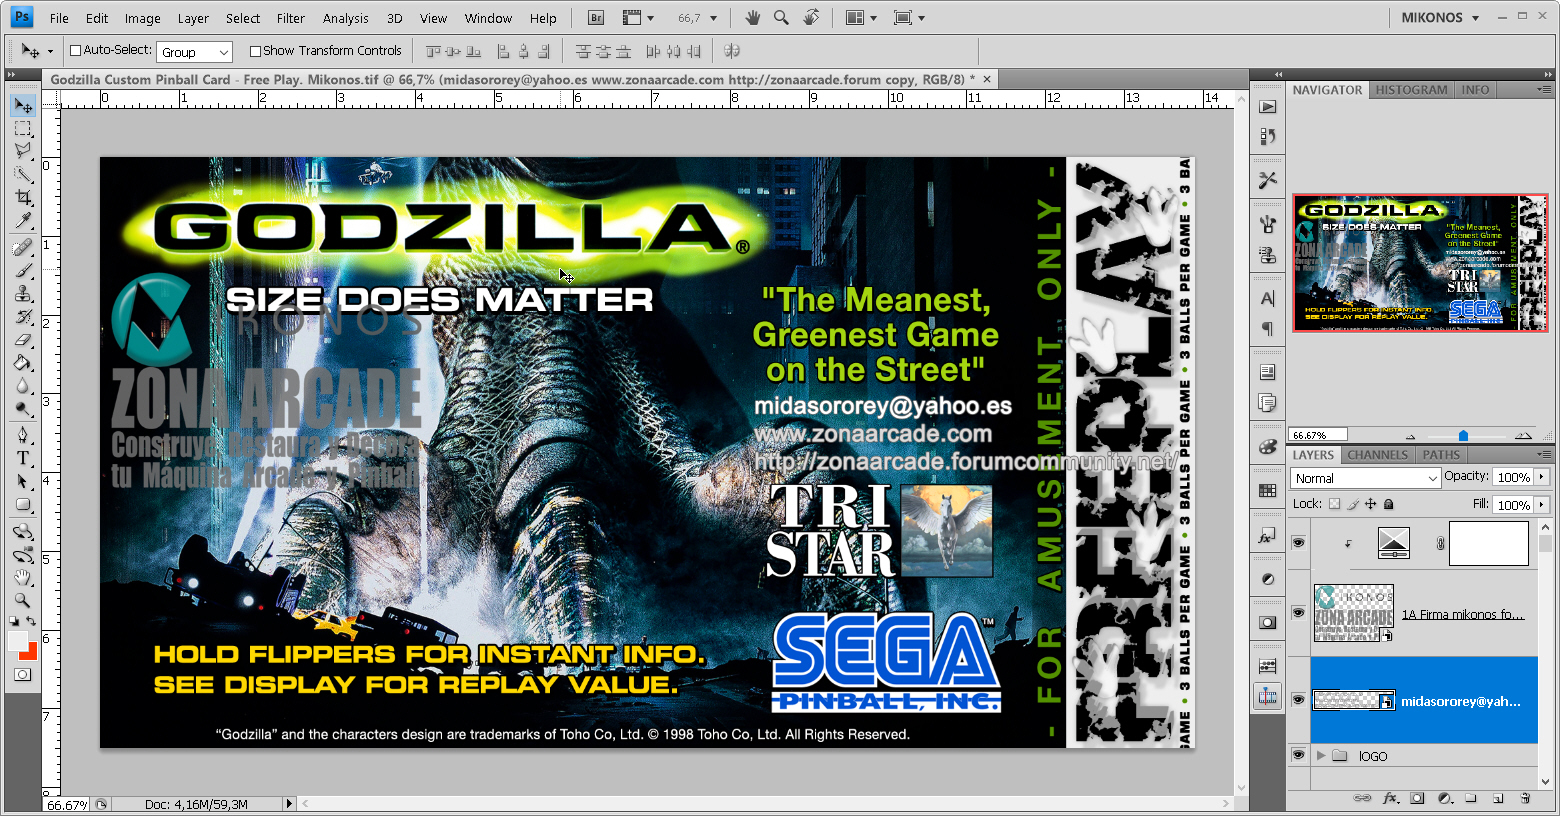 Godzilla%20Custom%20Pinball%20Card%20-%20Free%20Play.%20Mikonos1.jpg